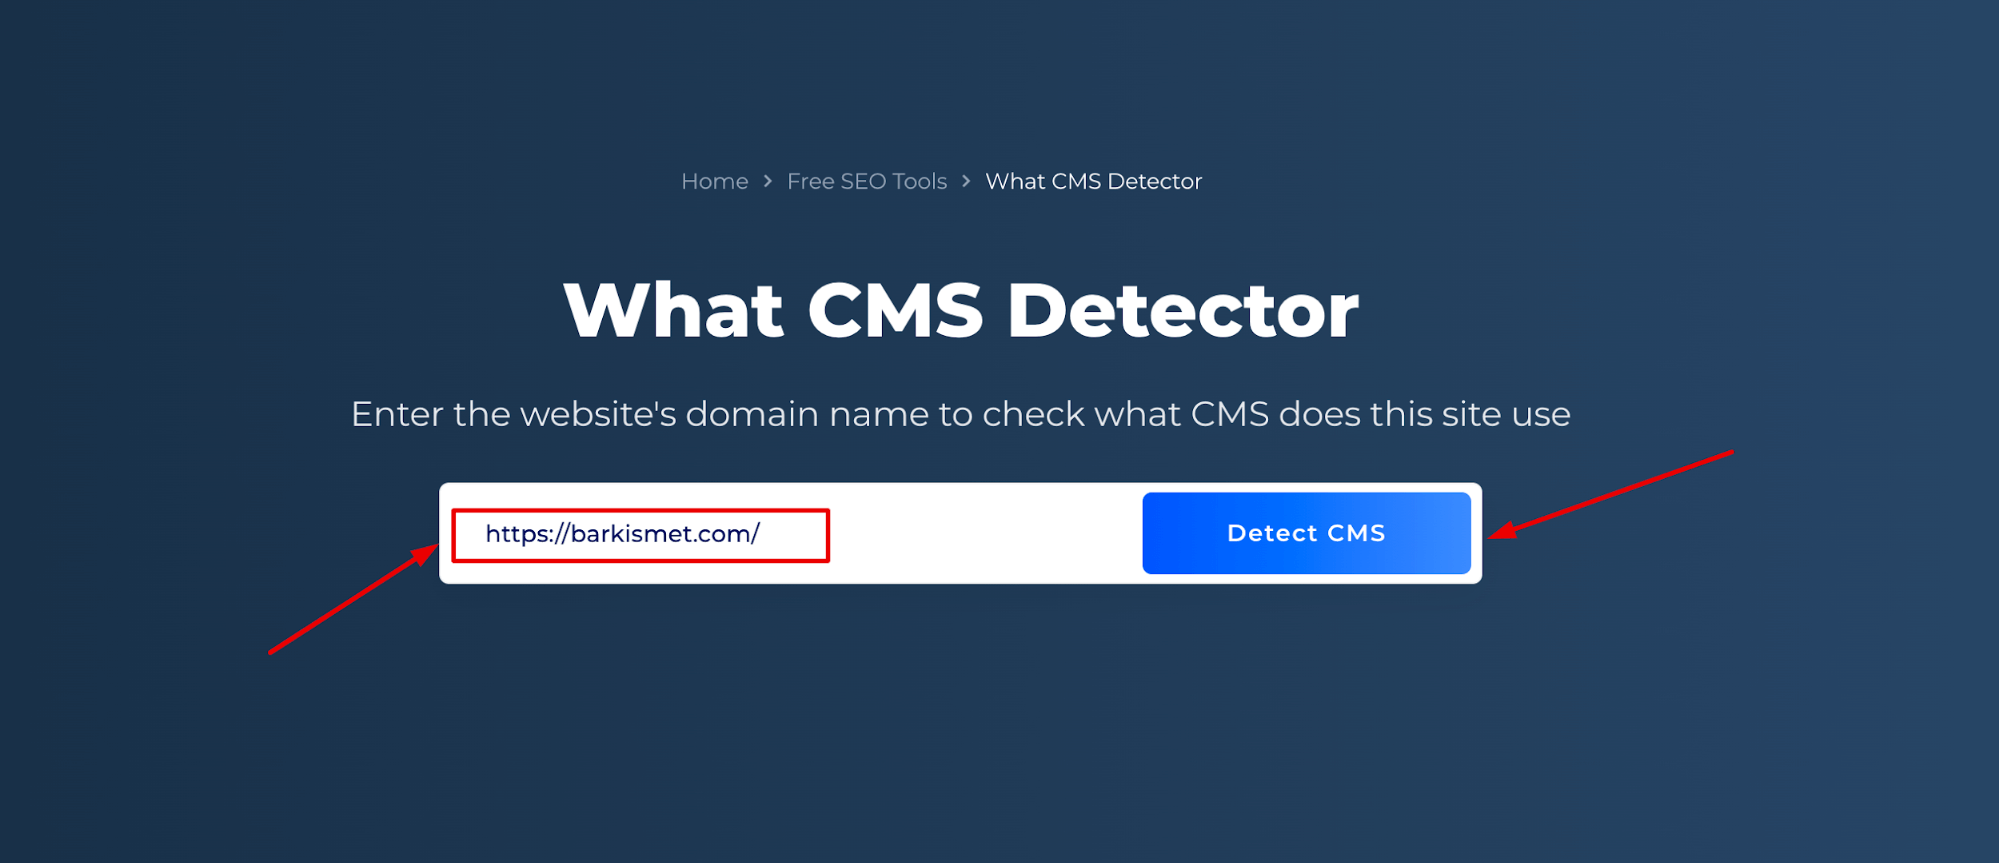 CMS Detector